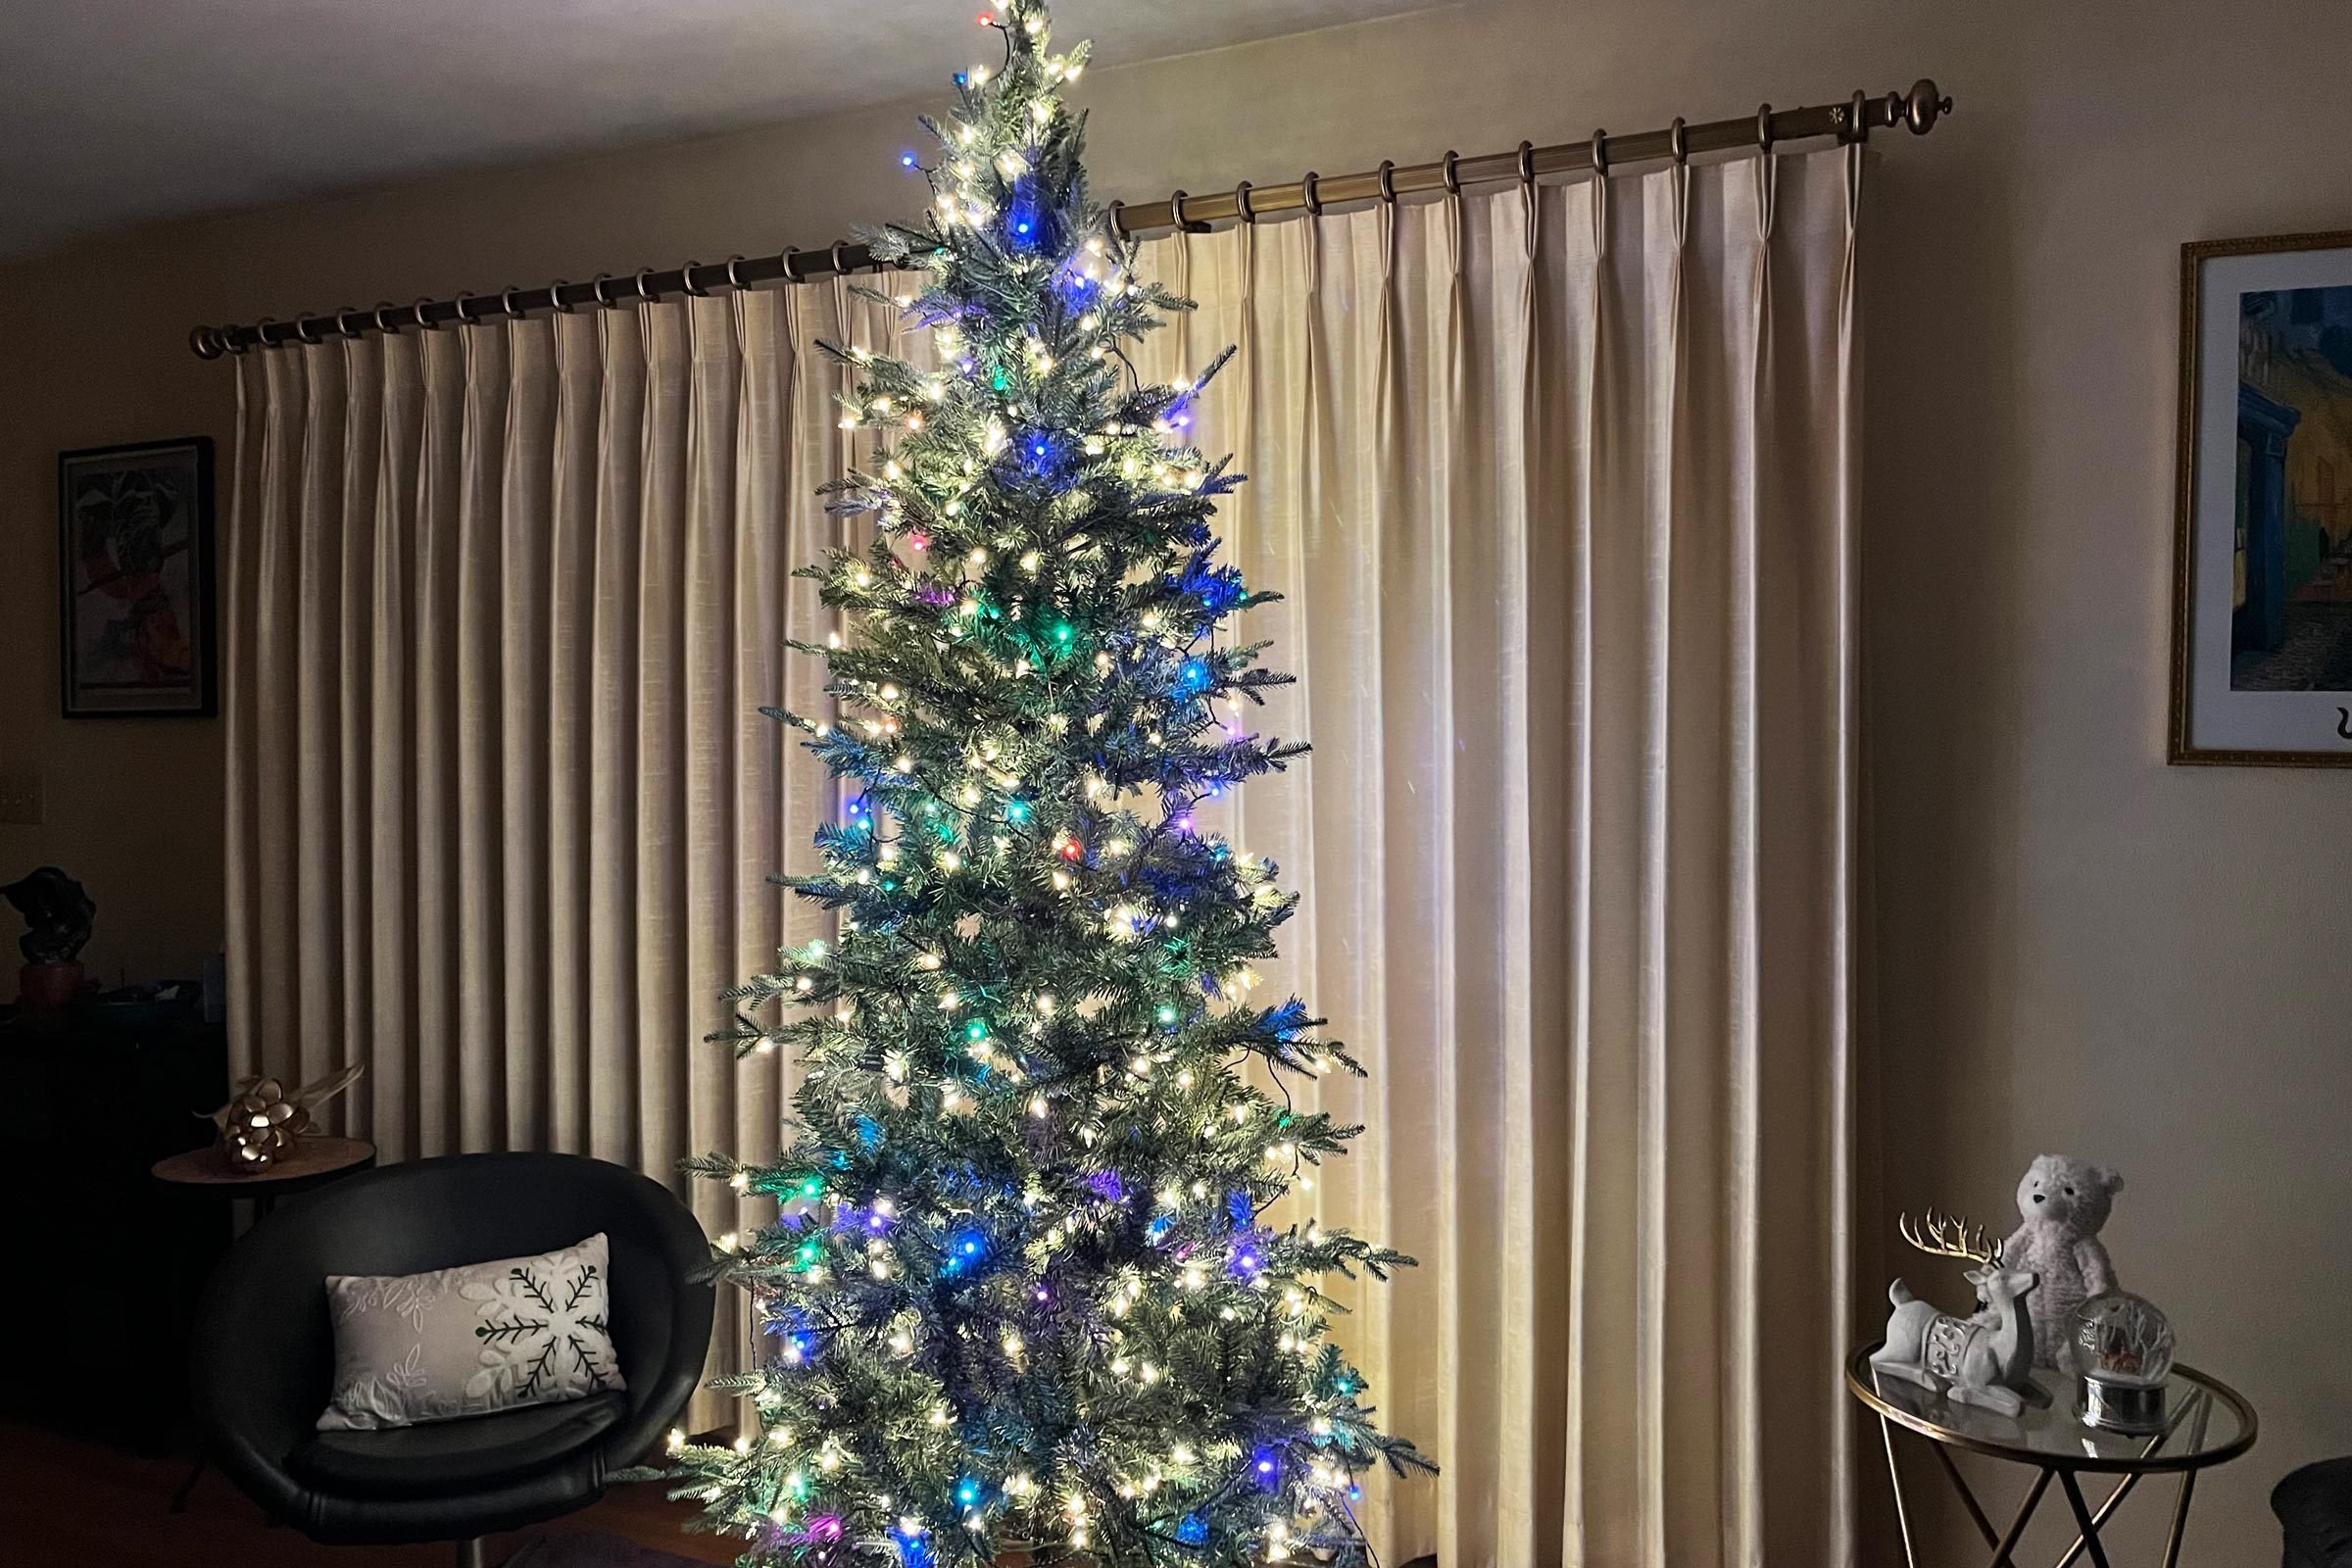 Smart Twinkly Lights on a tree